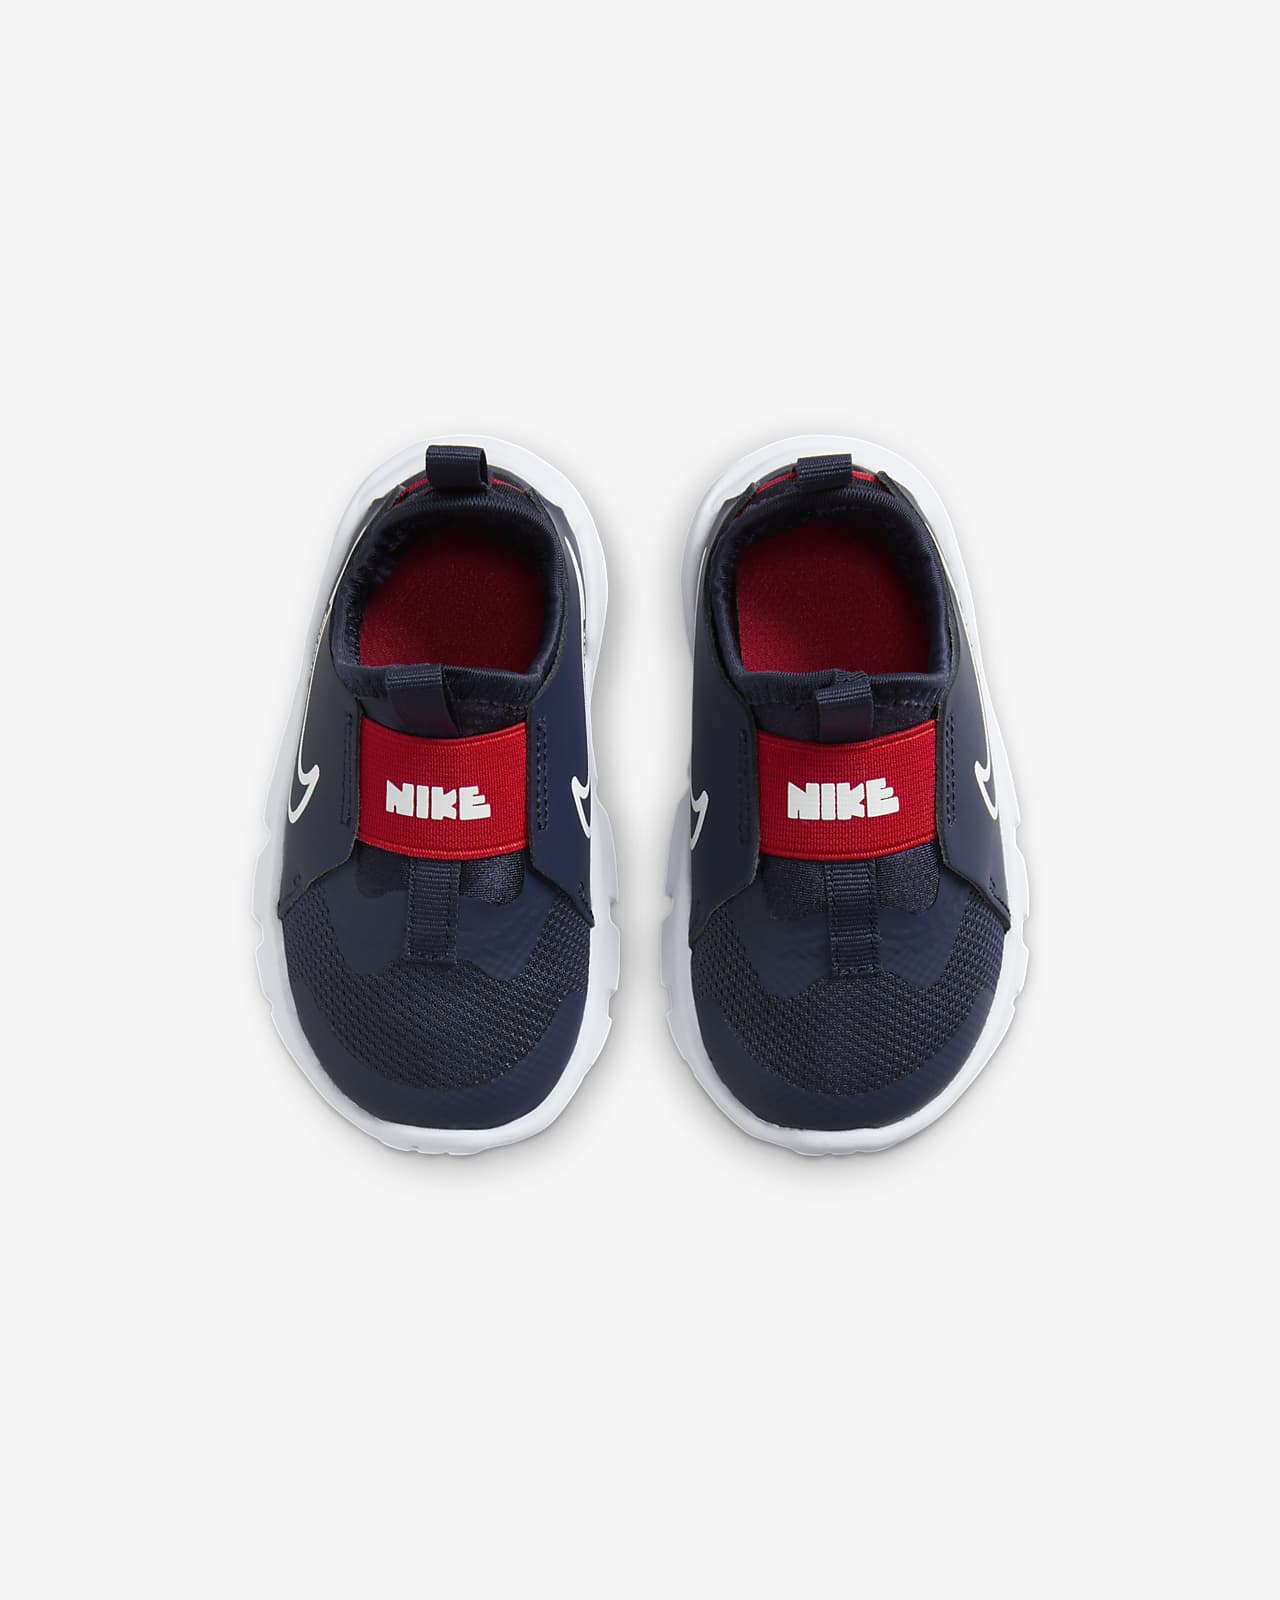 Nike Baby/Toddler Shoes. Flex ID 2 Nike Runner